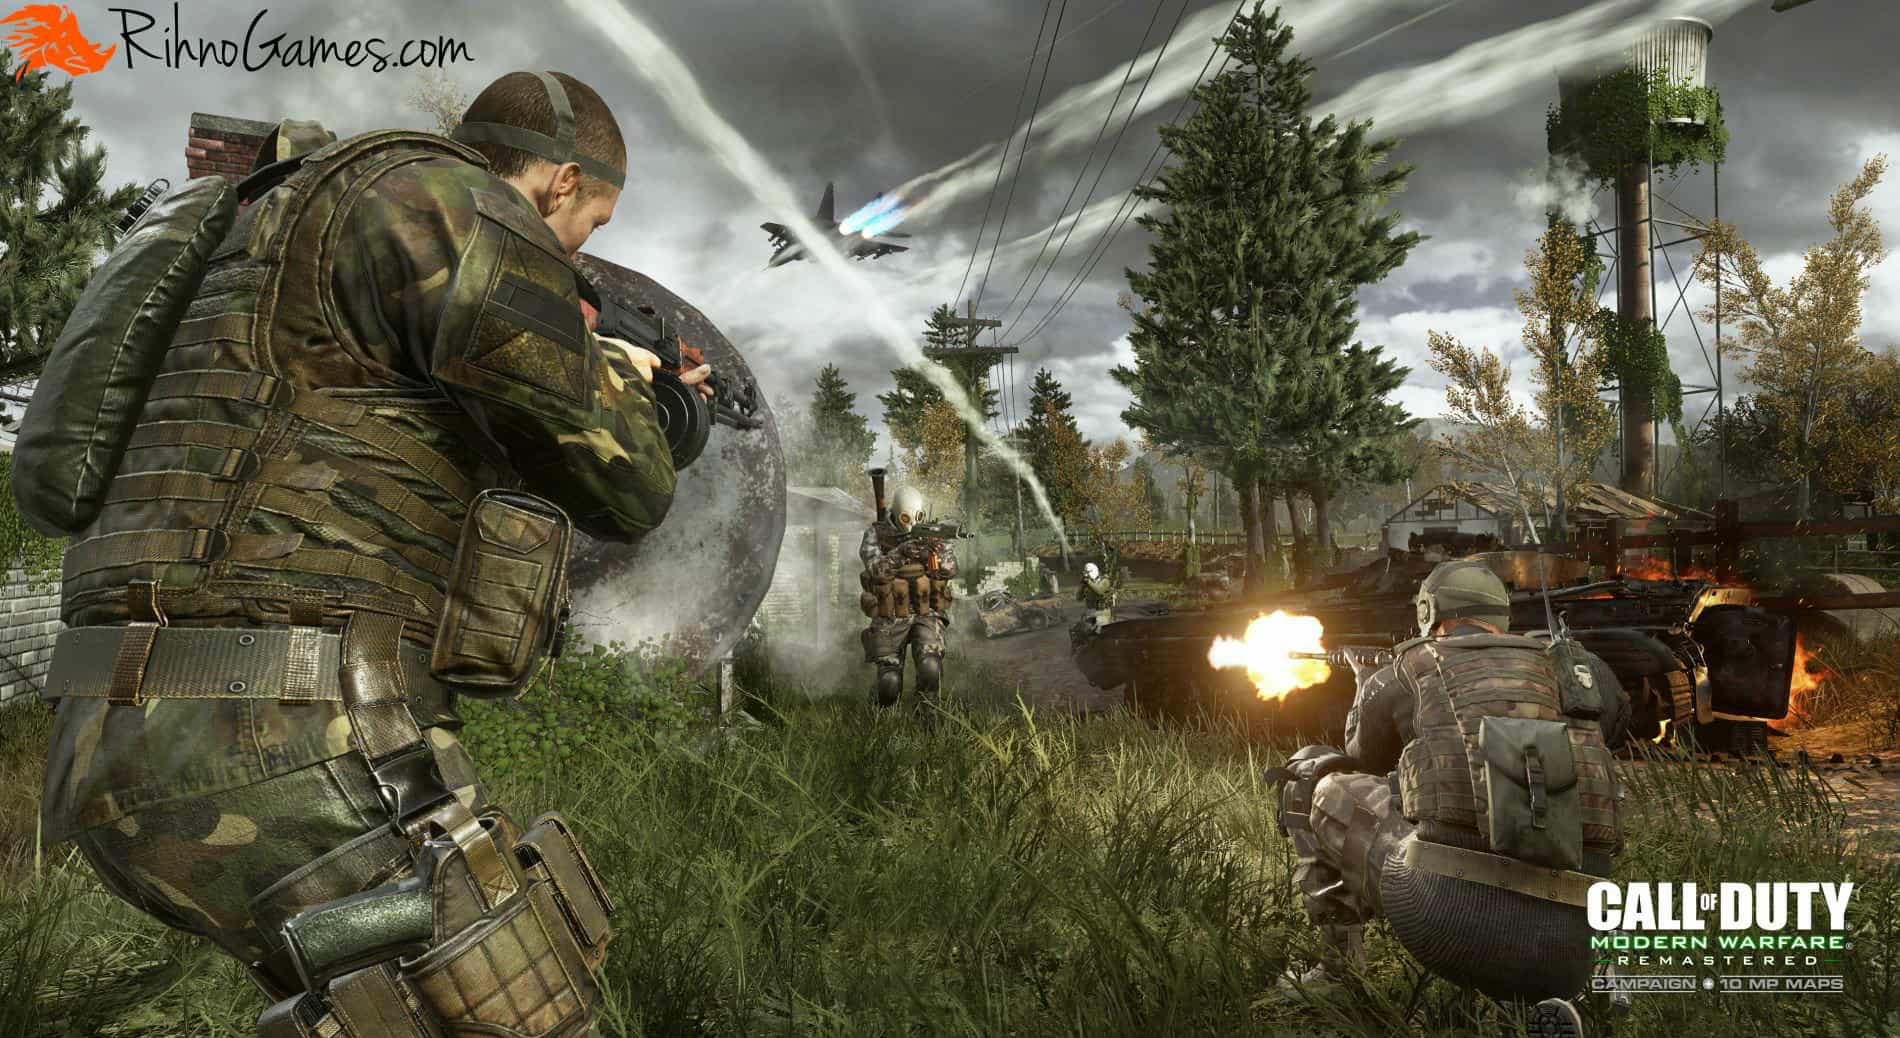 Call of Duty Modern Warfare Remastered Repack 26 GB